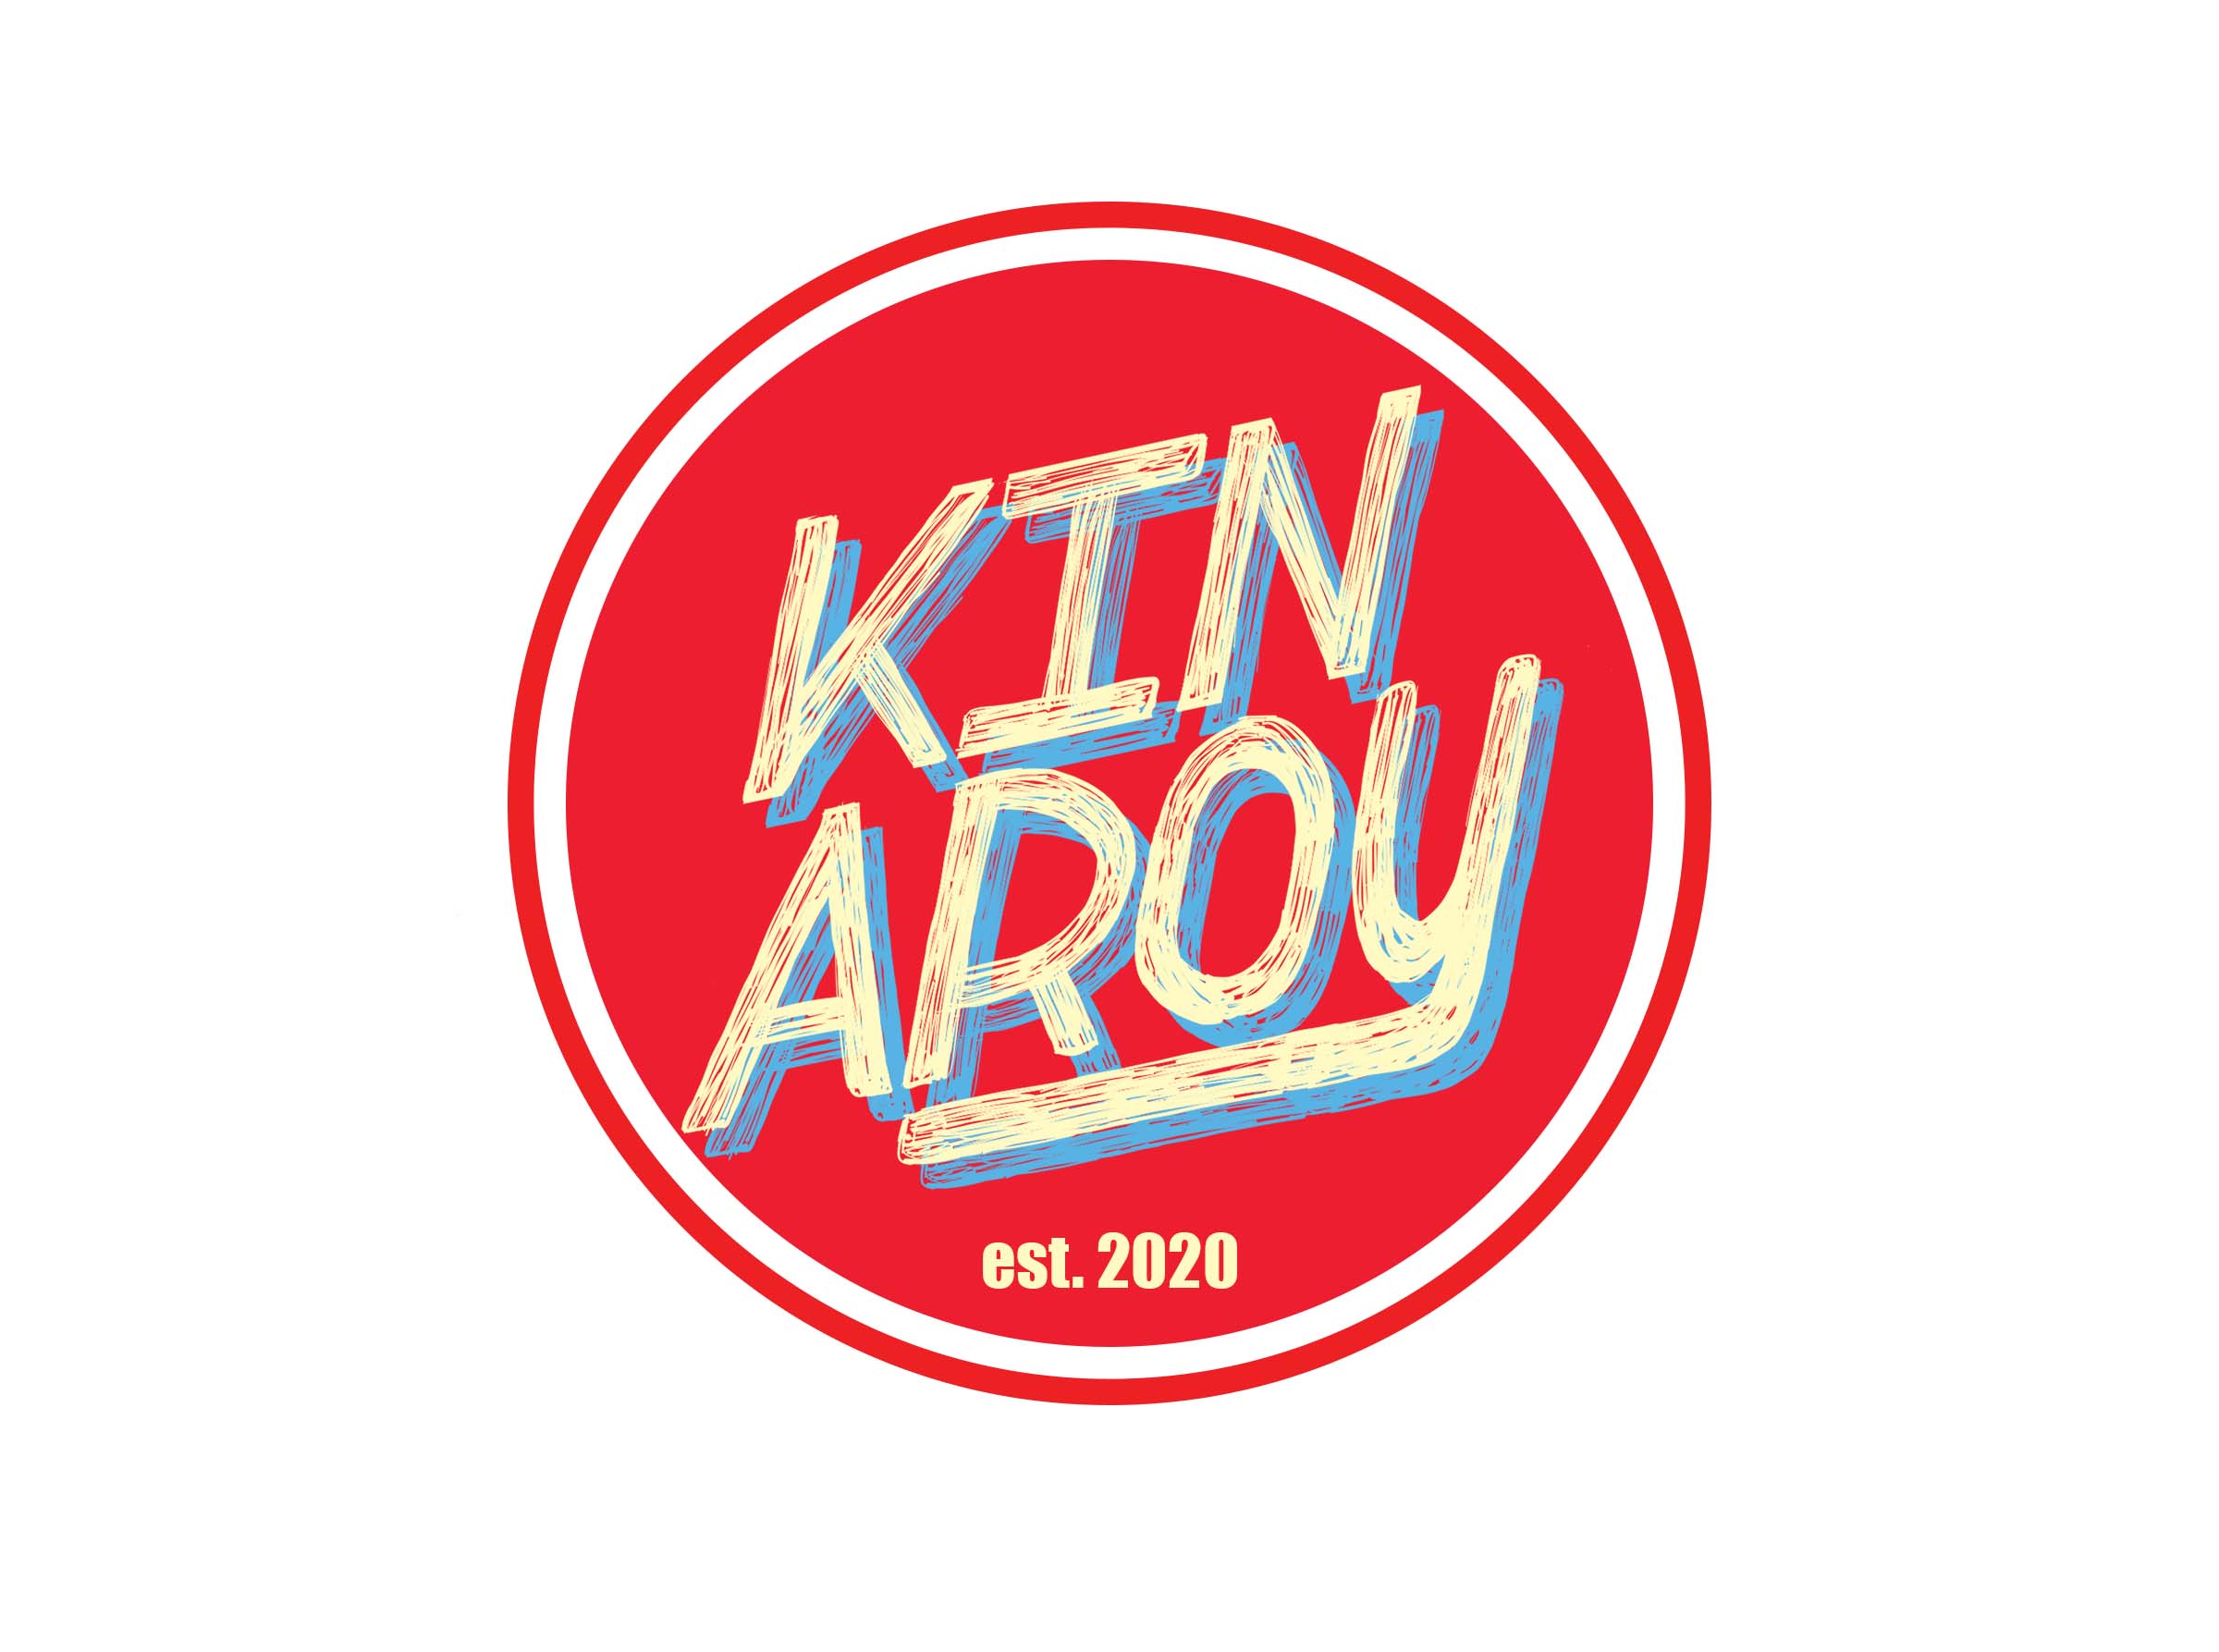 Kin Aroy